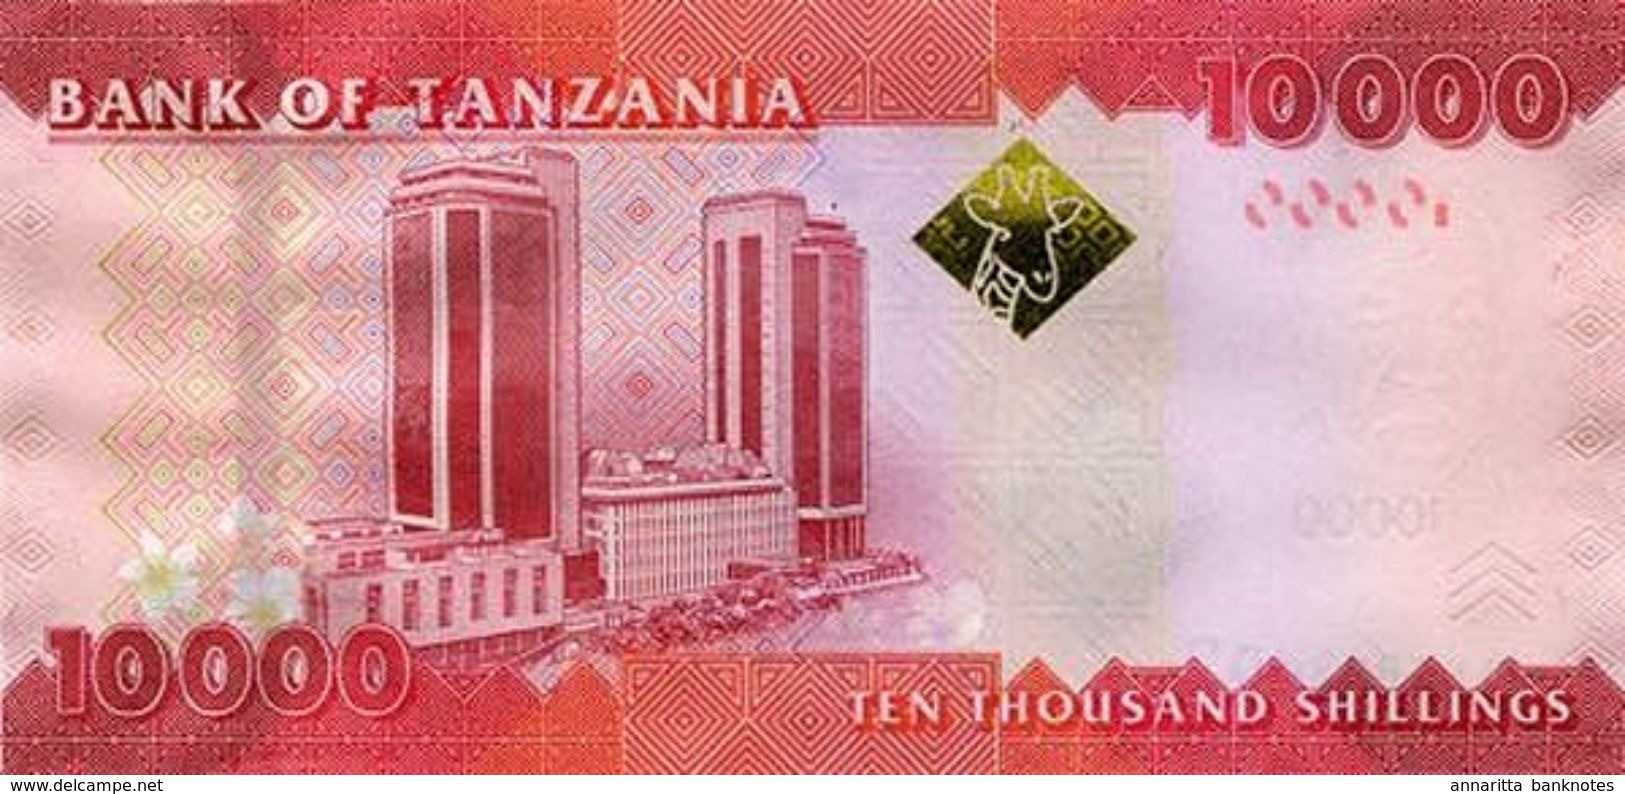 Tanzania (BOT) 10000 Shillings ND (2015) UNC Cat No. P-44b / TZ143b - Tanzania